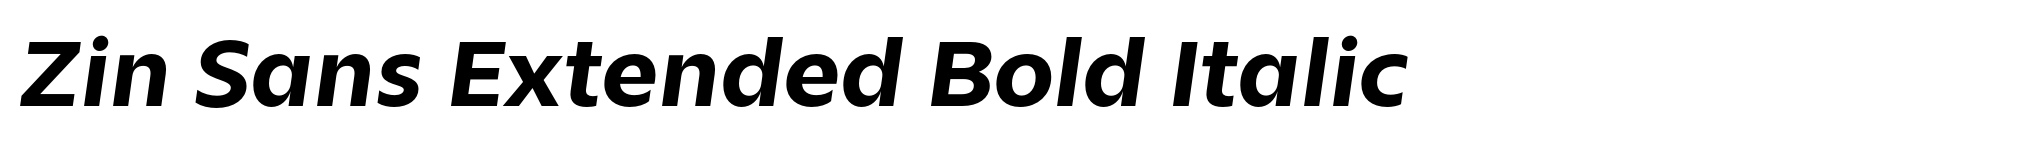 Zin Sans Extended Bold Italic image